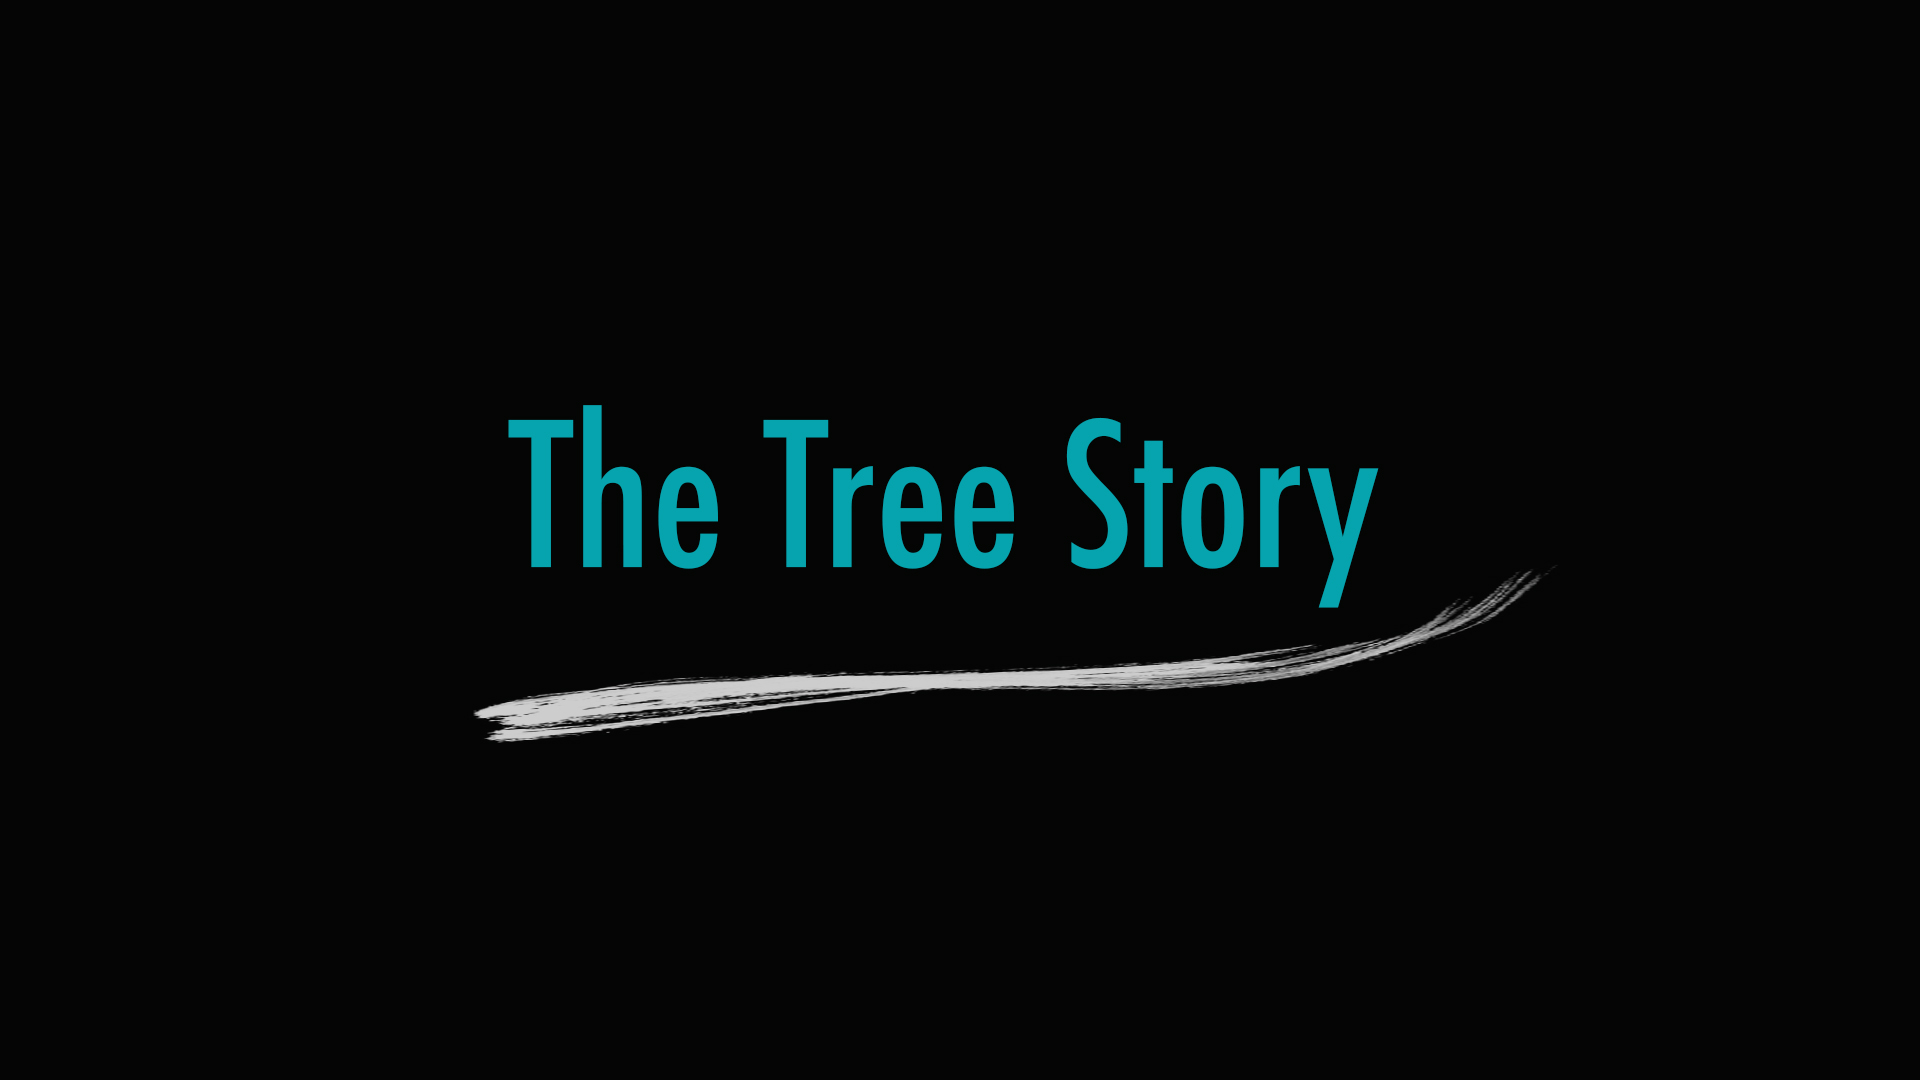 The tree story